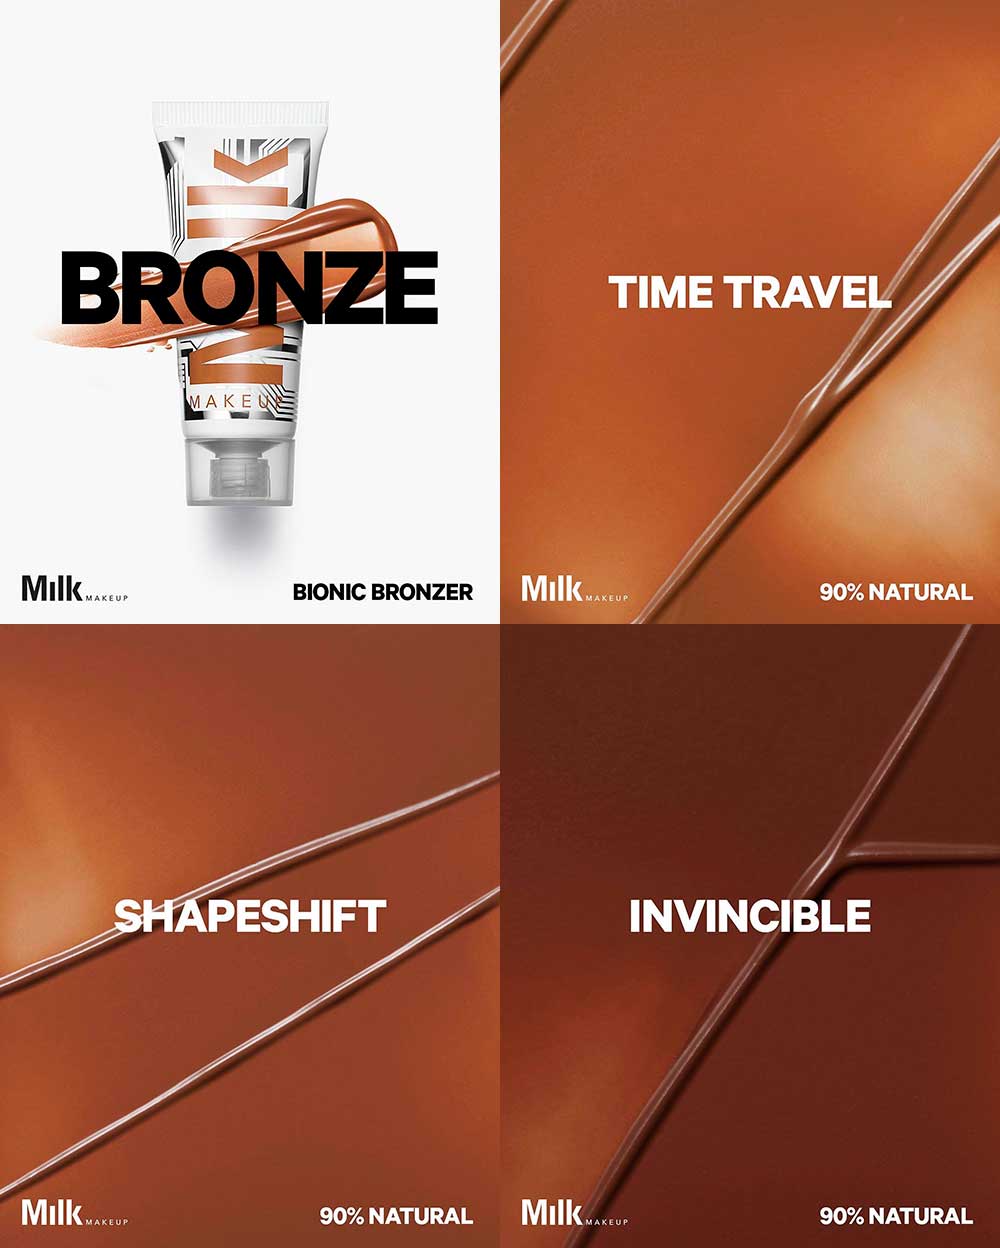 Hydrating Liquid Bronzer Milk Makeup Bionic Bronzer Shades Time Travel (light bronze), Shapeshift (medium bronze), and Invincible (deep bronze)